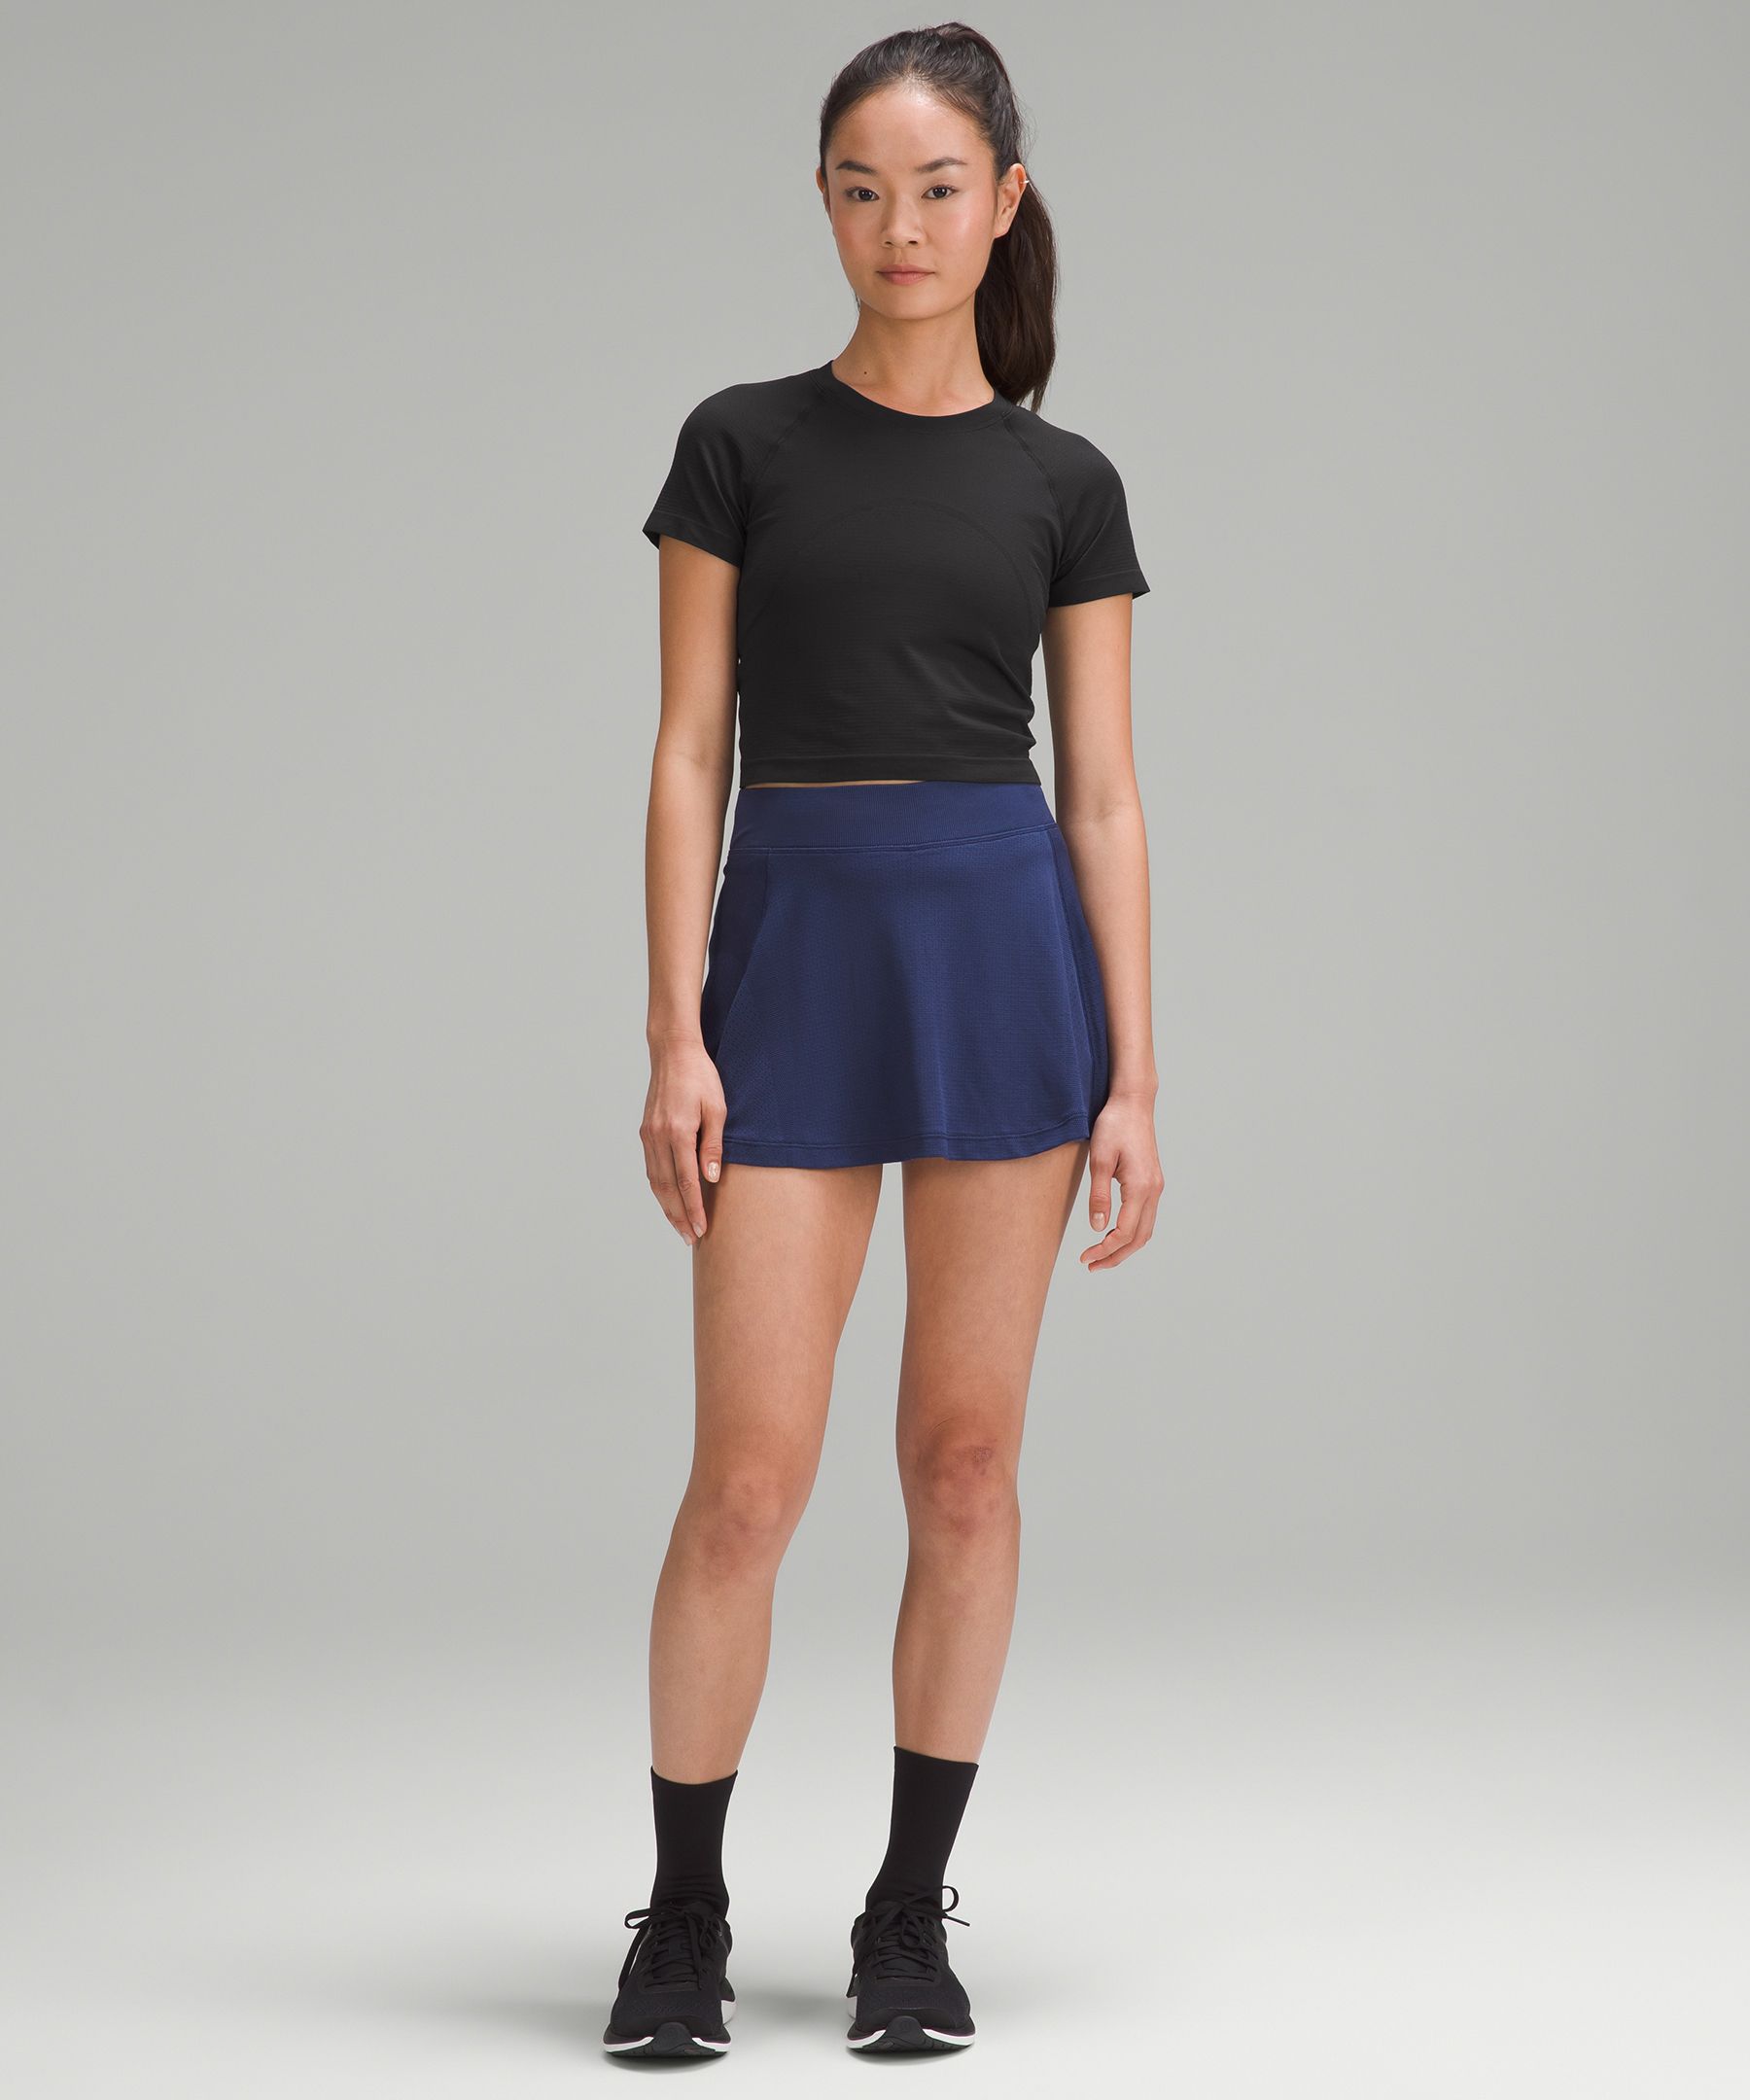 Swiftly Tech Short-Sleeve Shirt 2.0, Women's Short Sleeve Shirts & Tee's, lululemon